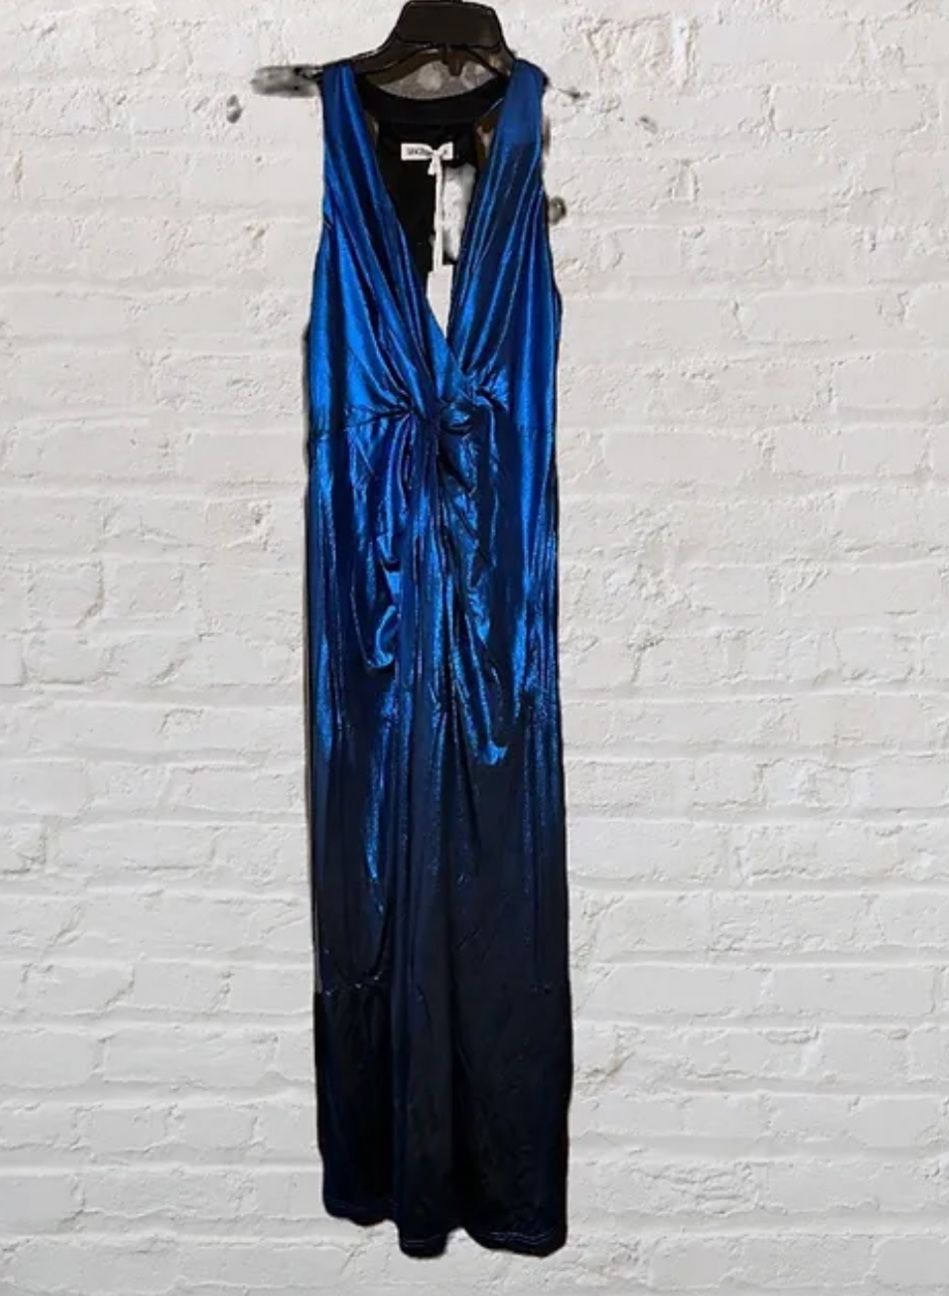 Brand New Size (Medium) Royal Blue Monochrome Semi-Formal Dress